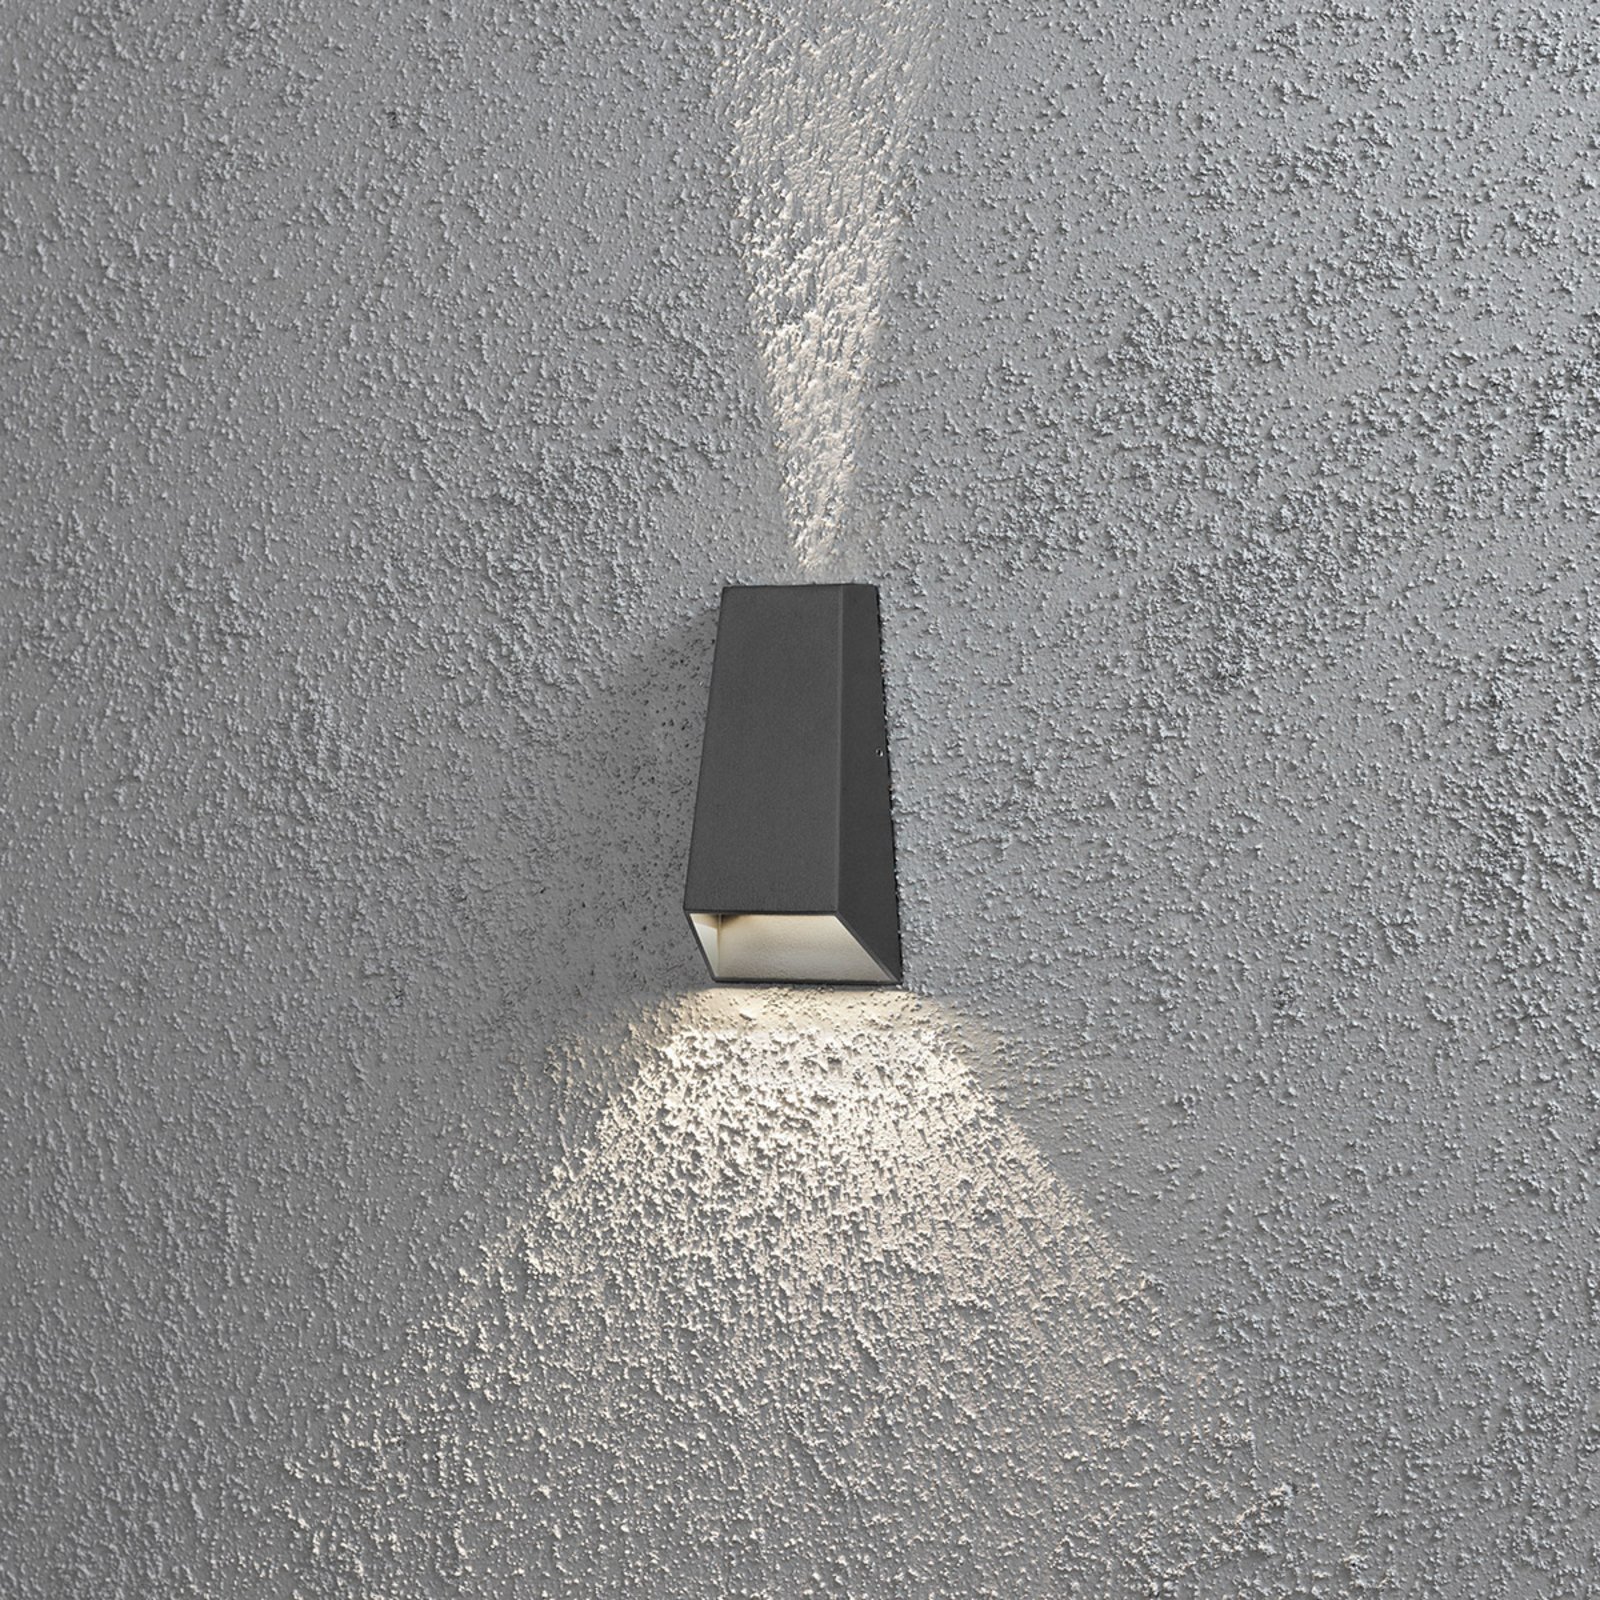 Imola LED outdoor wall light, double beam